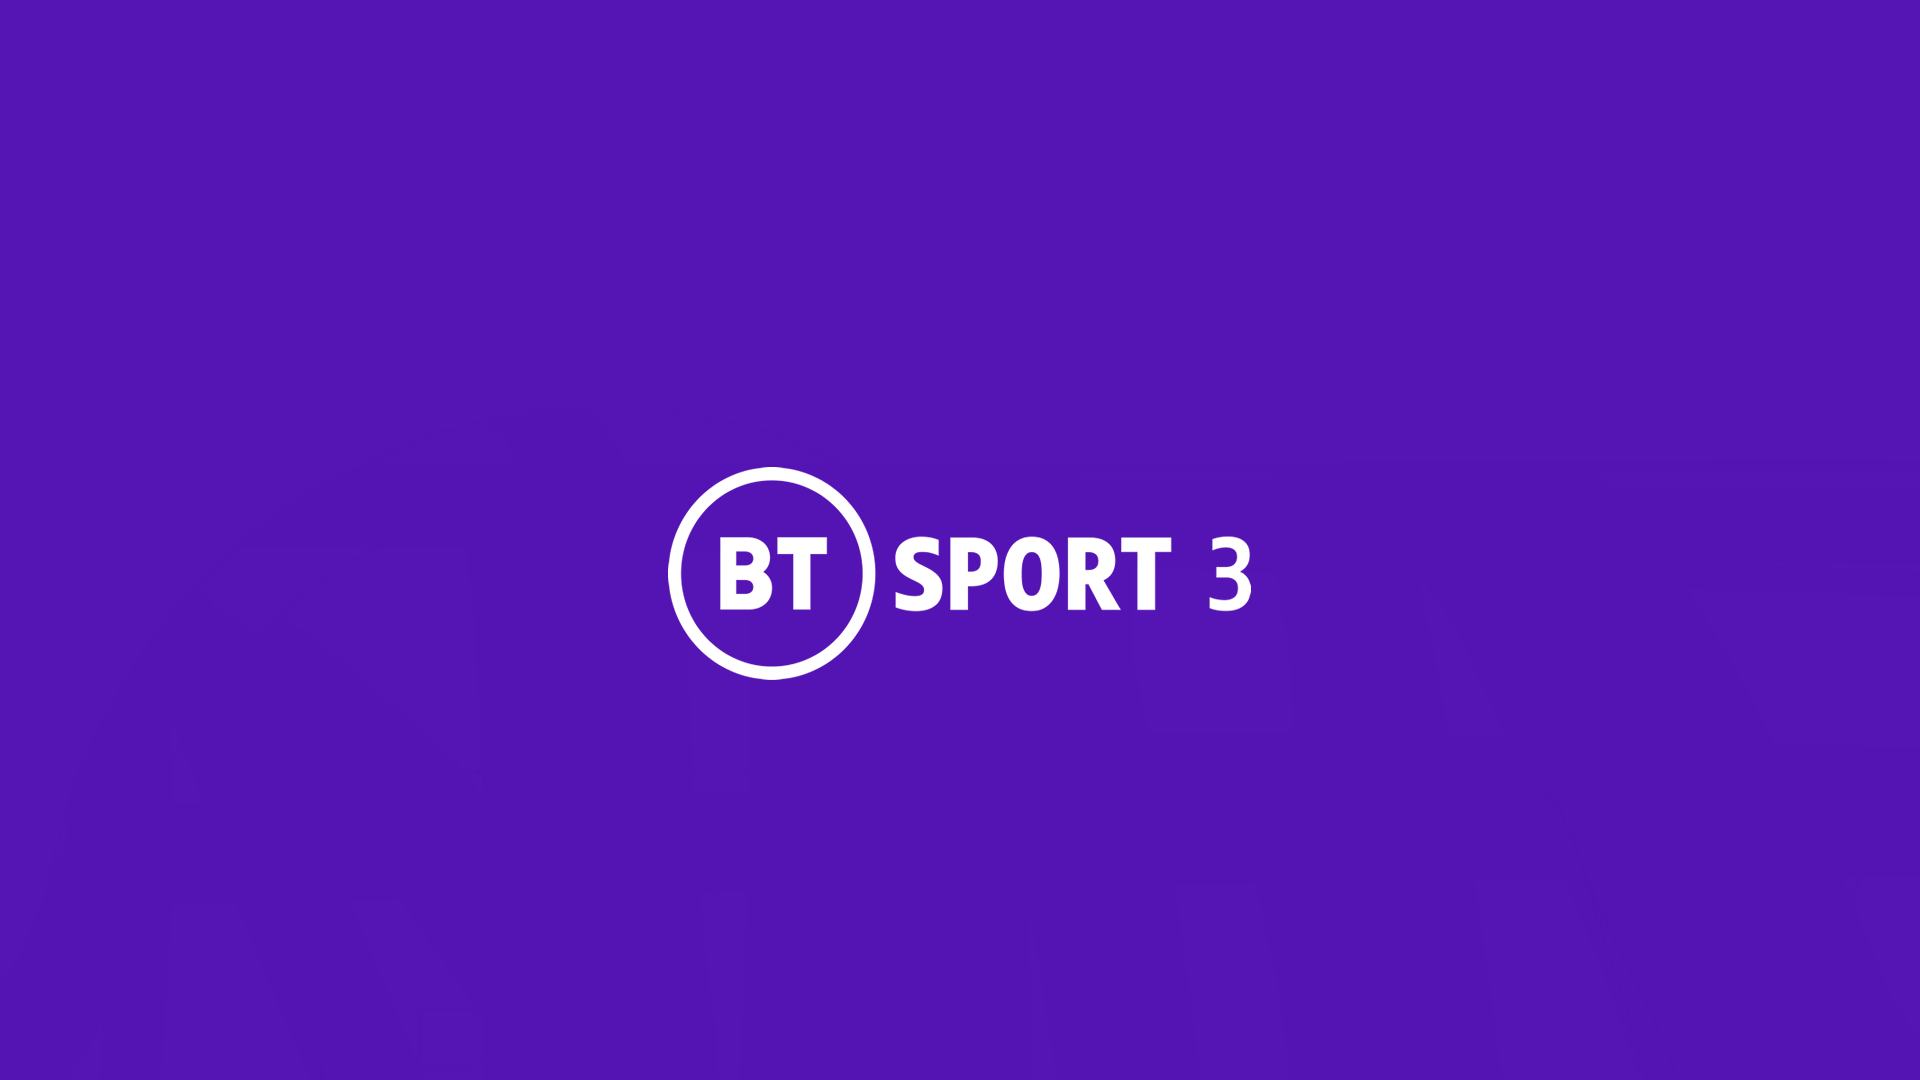 BT SPORTS 3 UK Live Online